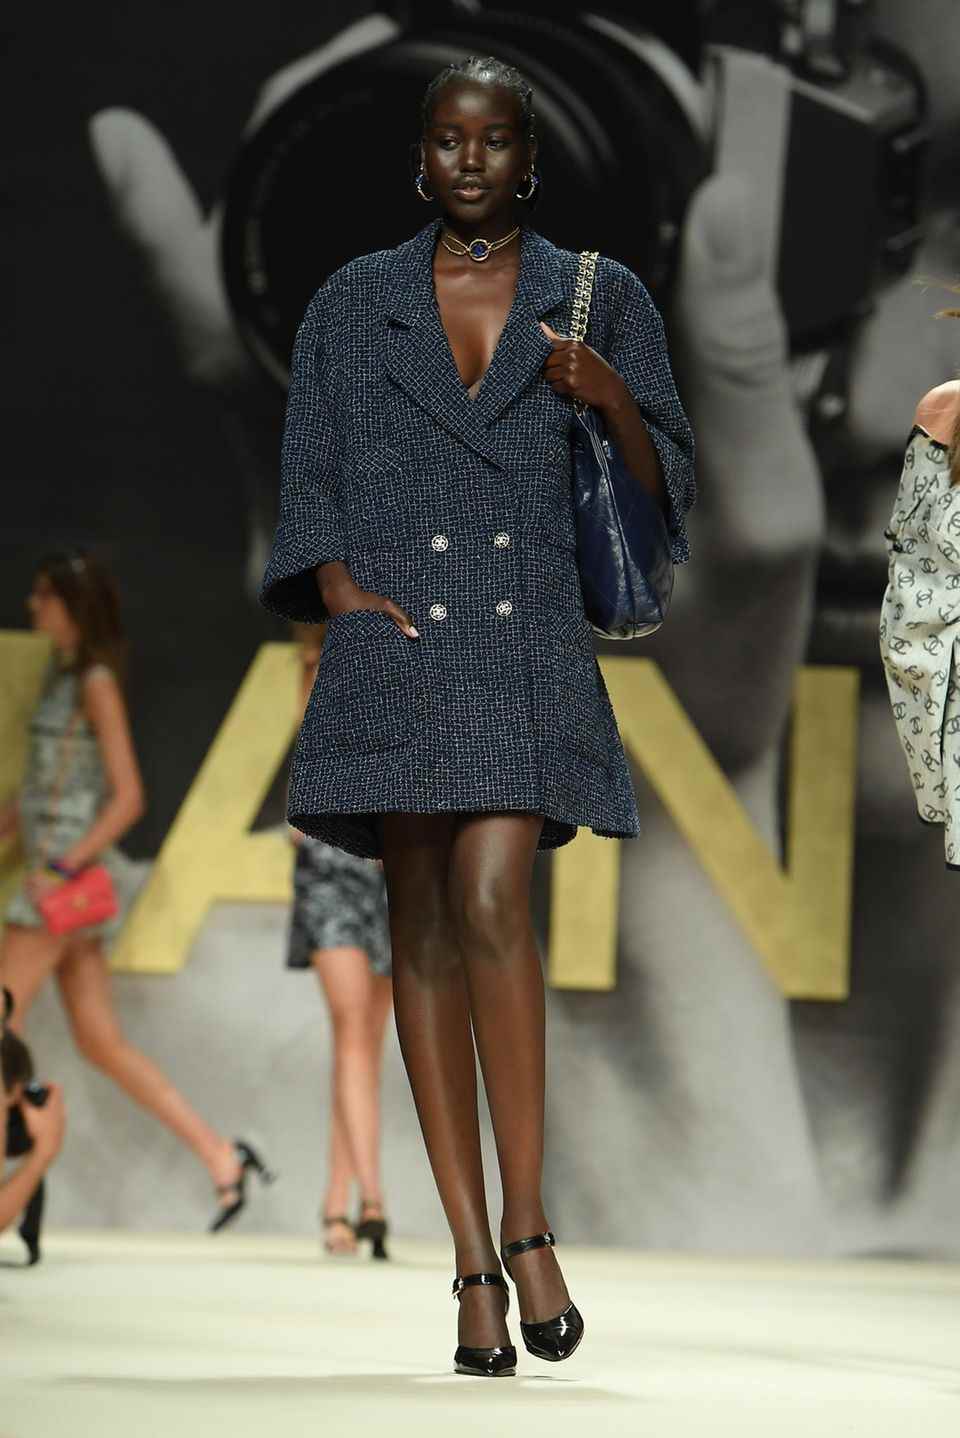 Model at Chanel show wears tweet blazer as total look